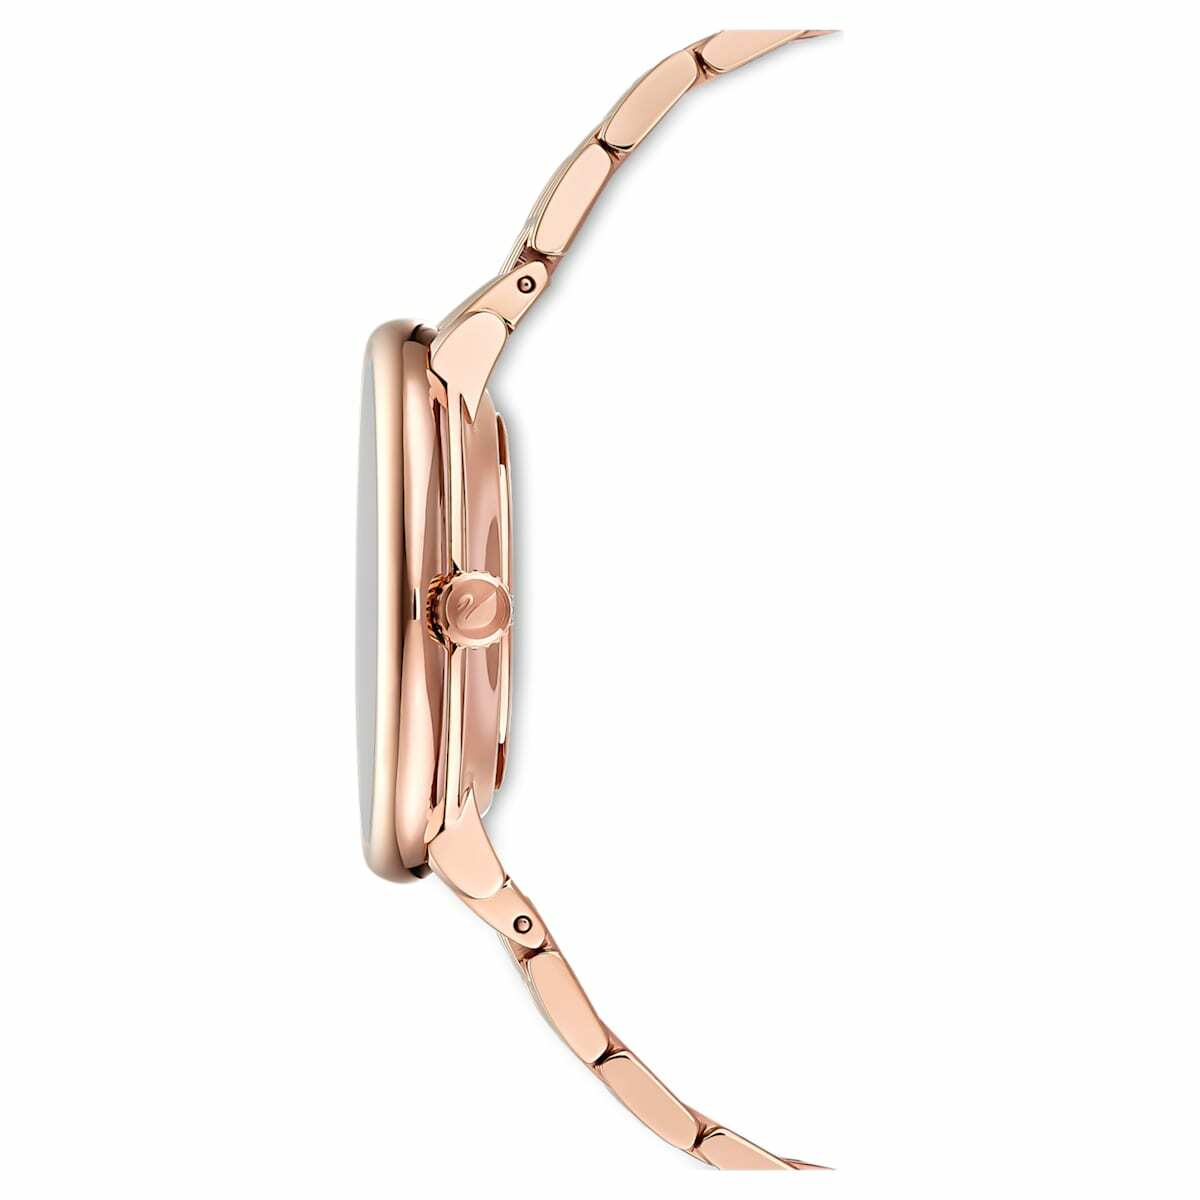 crystalline-chic-watch--metal-bracelet--rose-gold-tone--rose-gold-tone-pvd-swarovski-5544590 (1).jpg